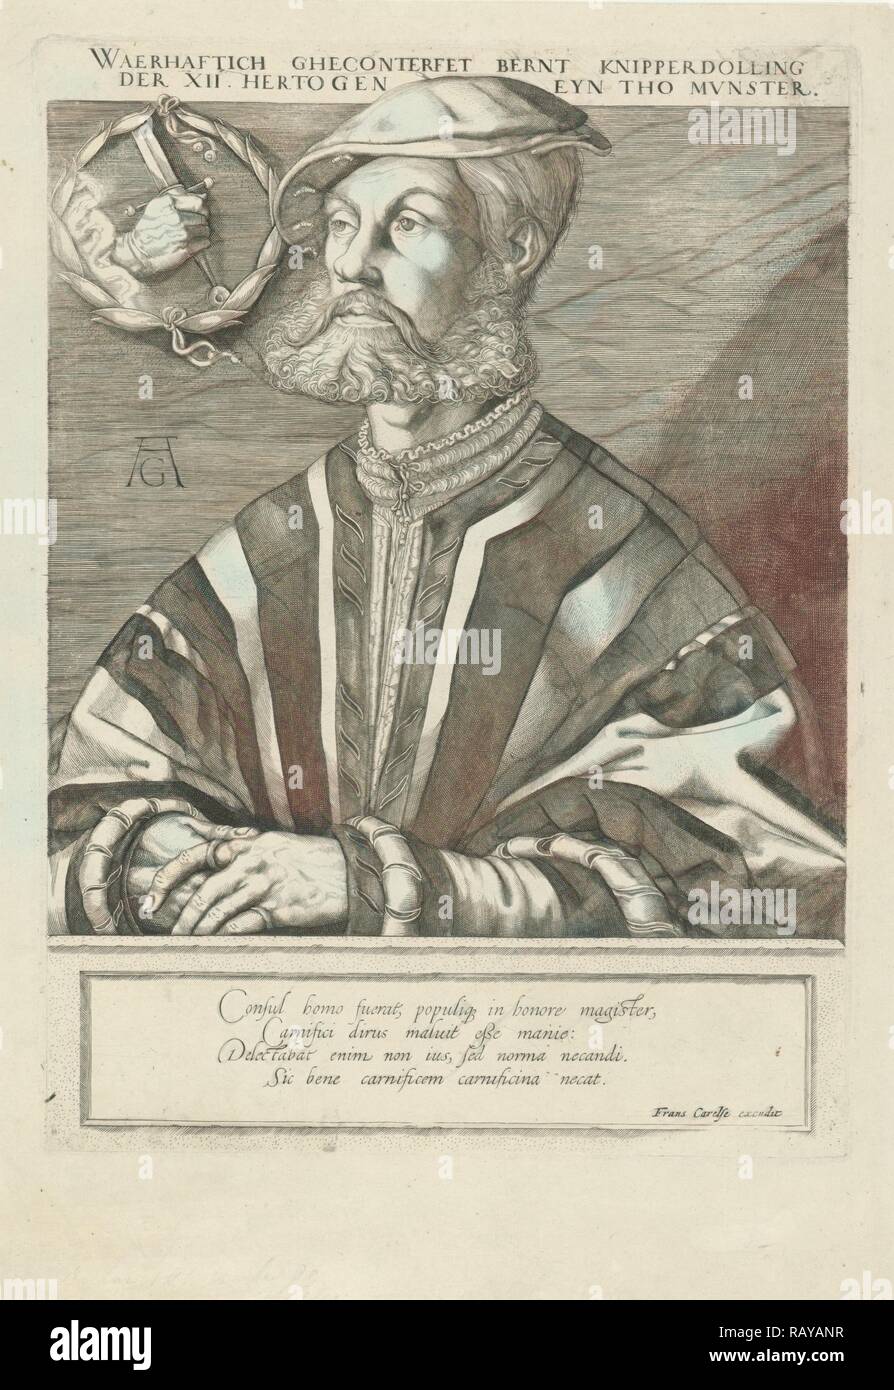 Portrait of Bernard Knipperdolling, Jan Harmensz. Muller, Frans Carelse, 1613 - 1617. Reimagined by Gibon. Classic reimagined Stock Photo